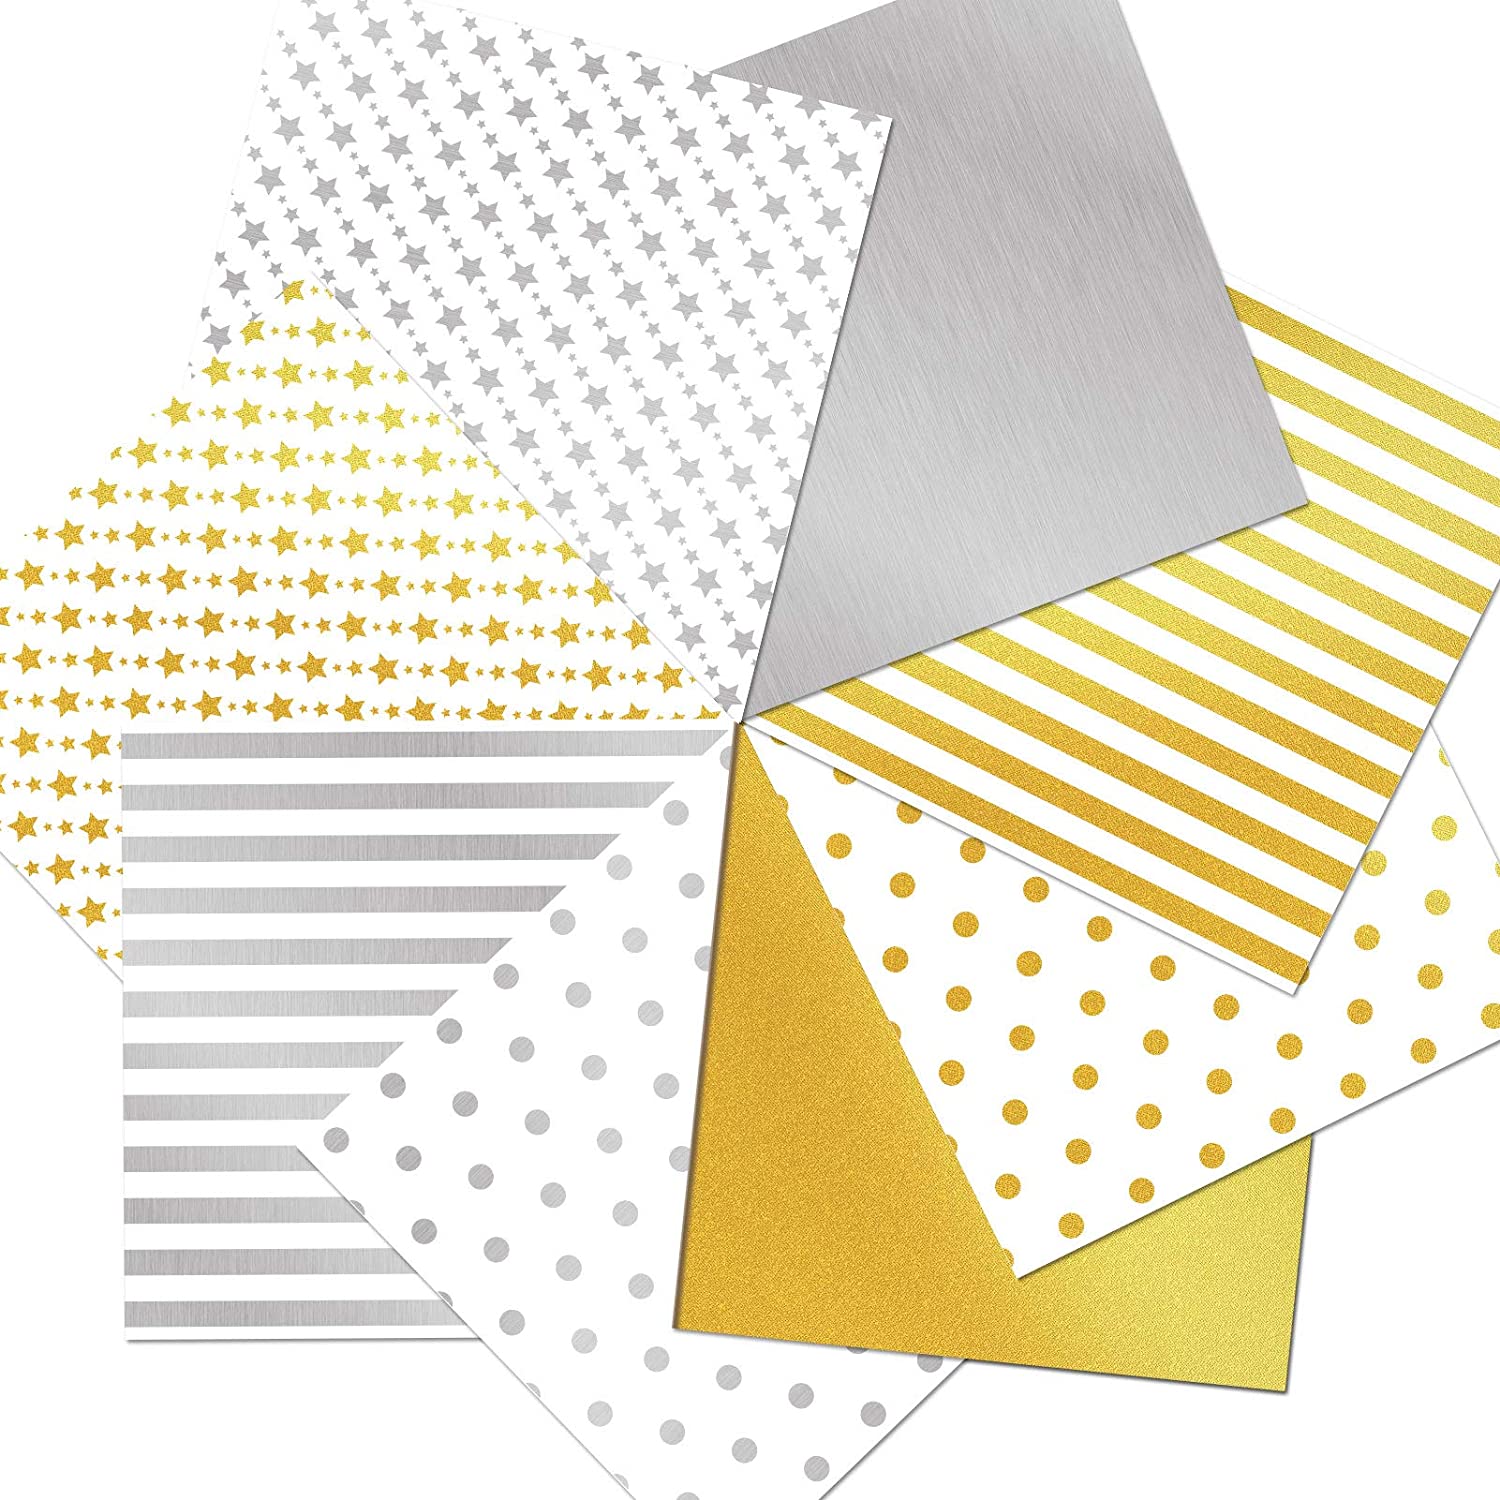 KD KIDPAR Metallic Patterned Tissue Paper, 160-Count